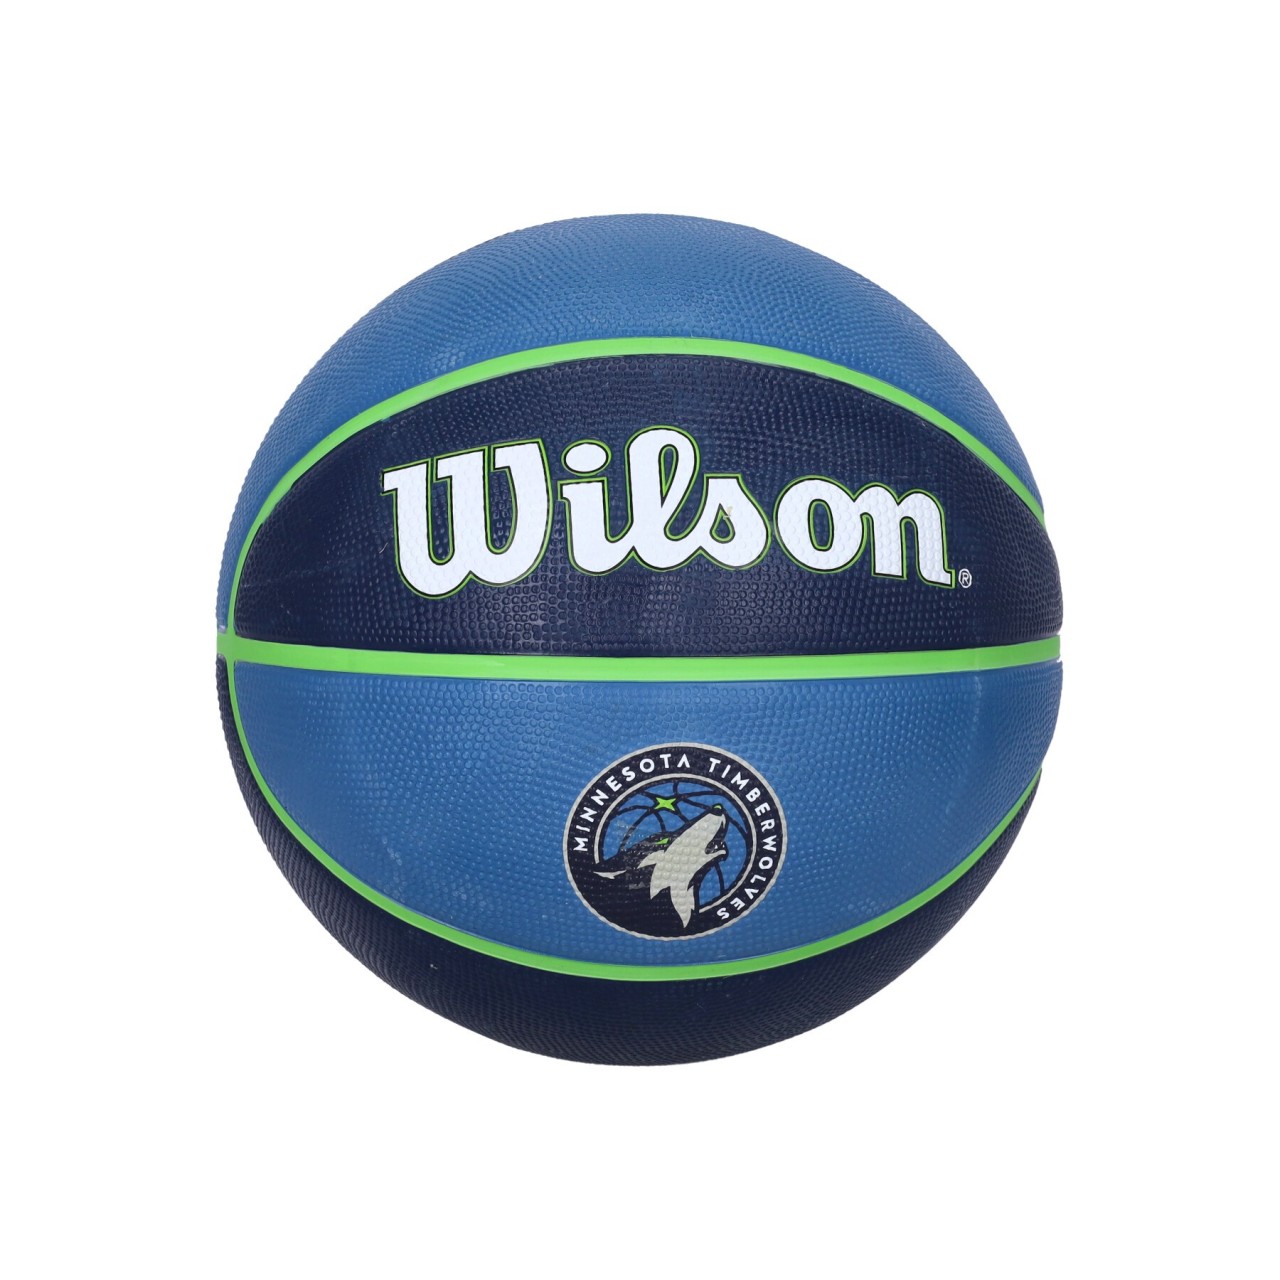 WILSON TEAM NBA TEAM TRIBUTE BASKETBALL SIZE 7 MINTIM WTB1300XBMIN